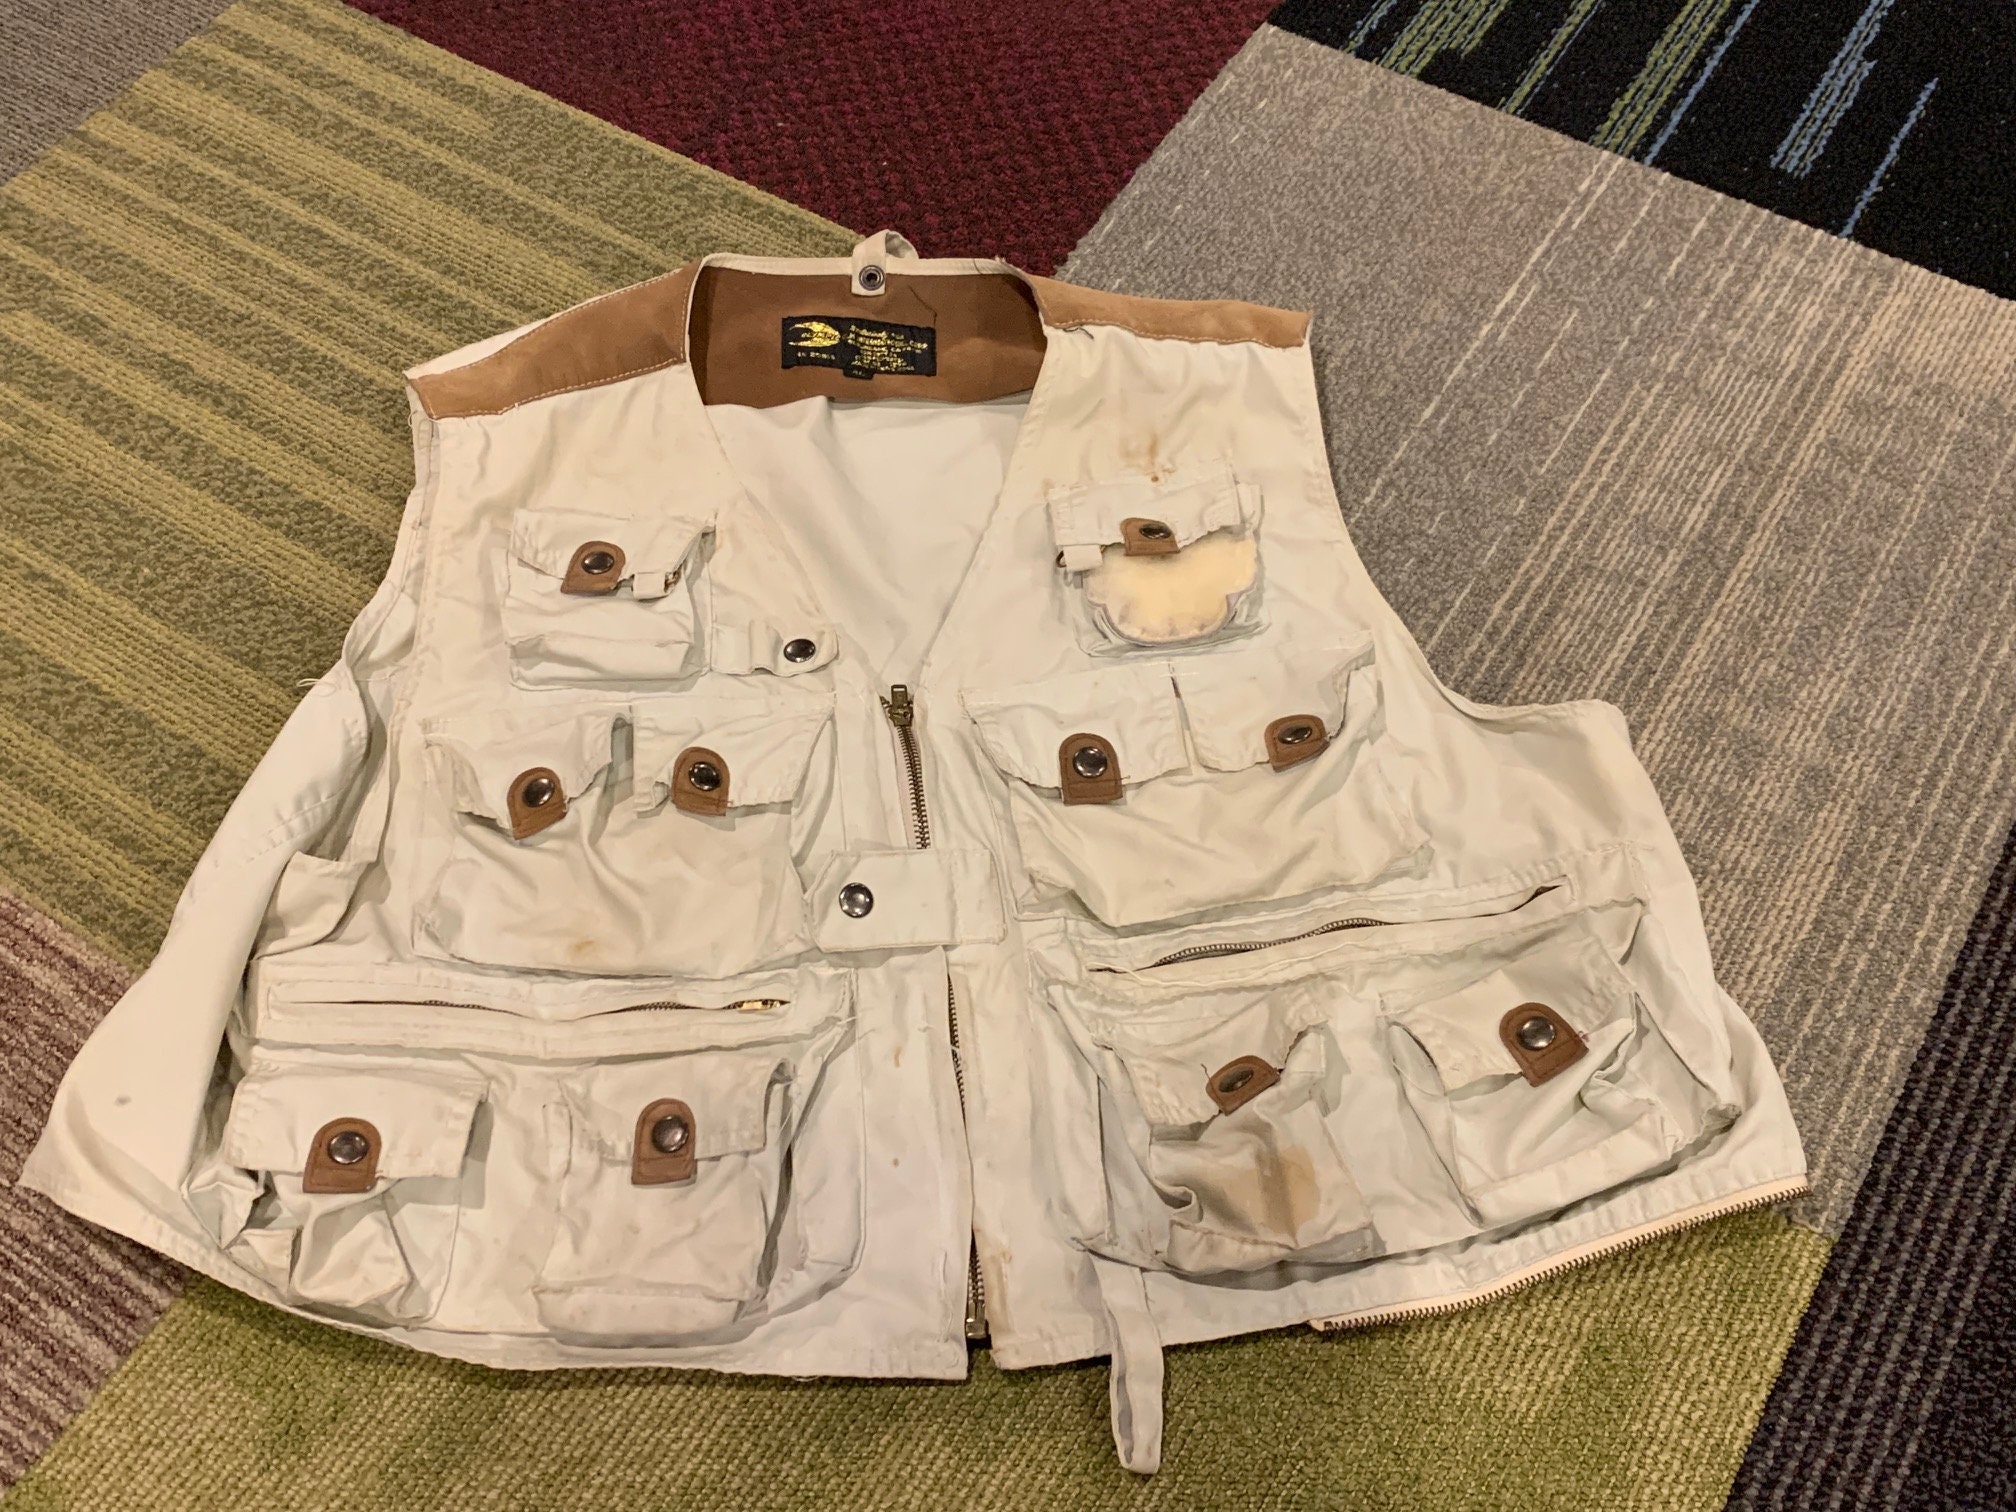 Vintage LL Bean Mens Fly Fishing Vest Size XL Beige Full Zip Front Pockets